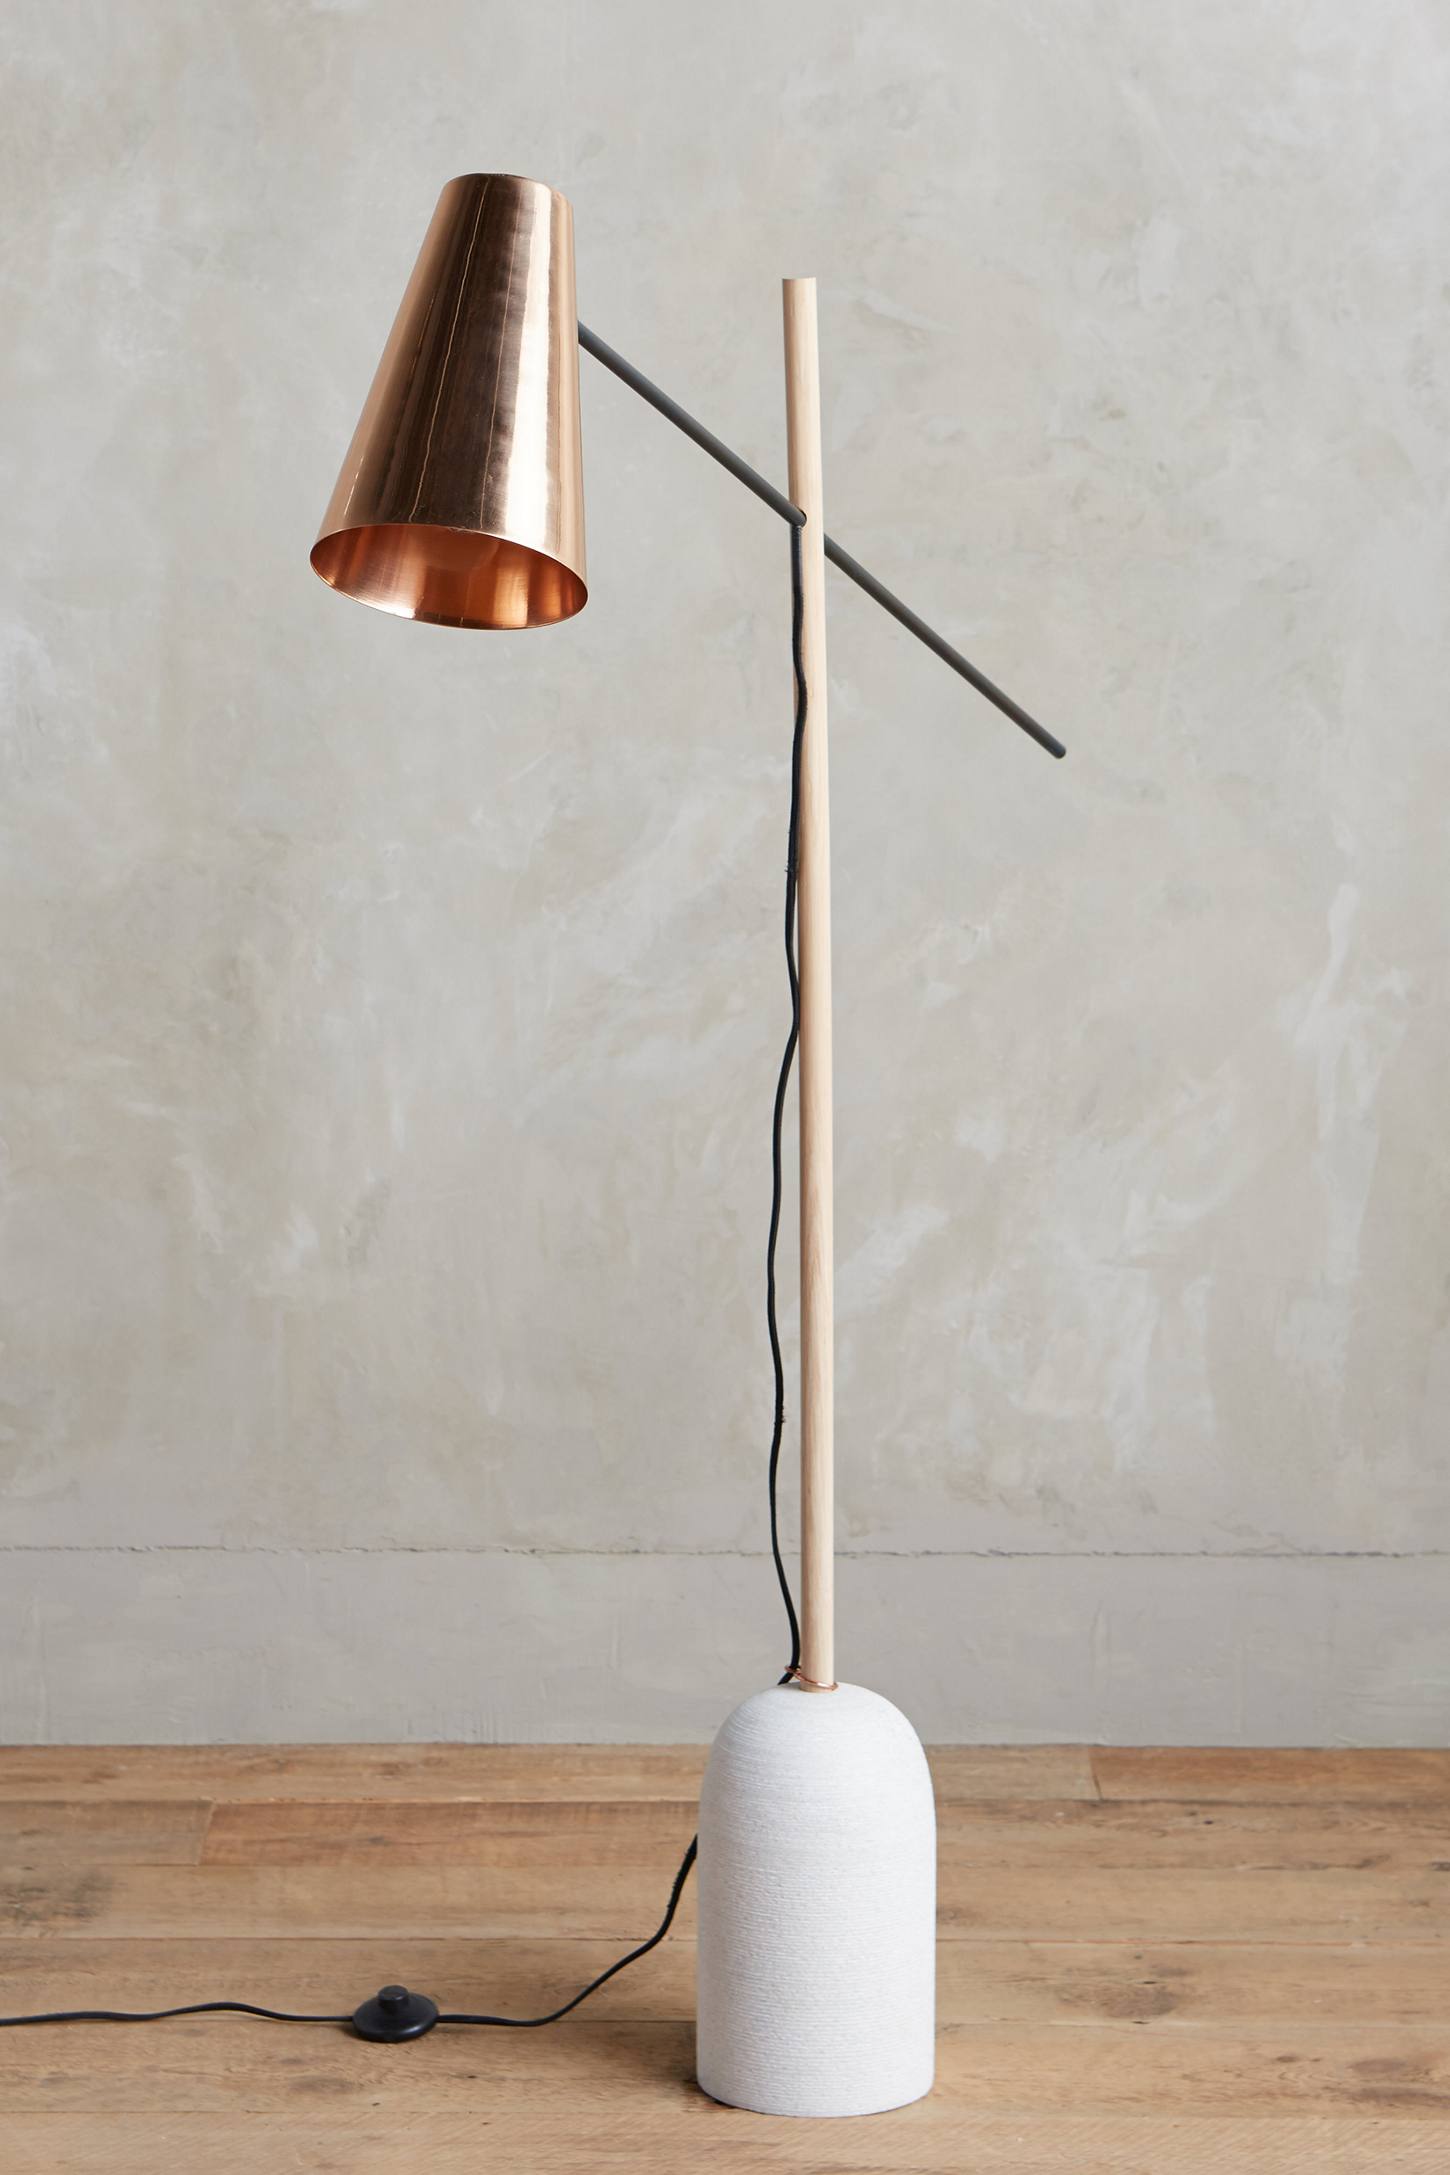 Copper floor lamp from Anthropologie